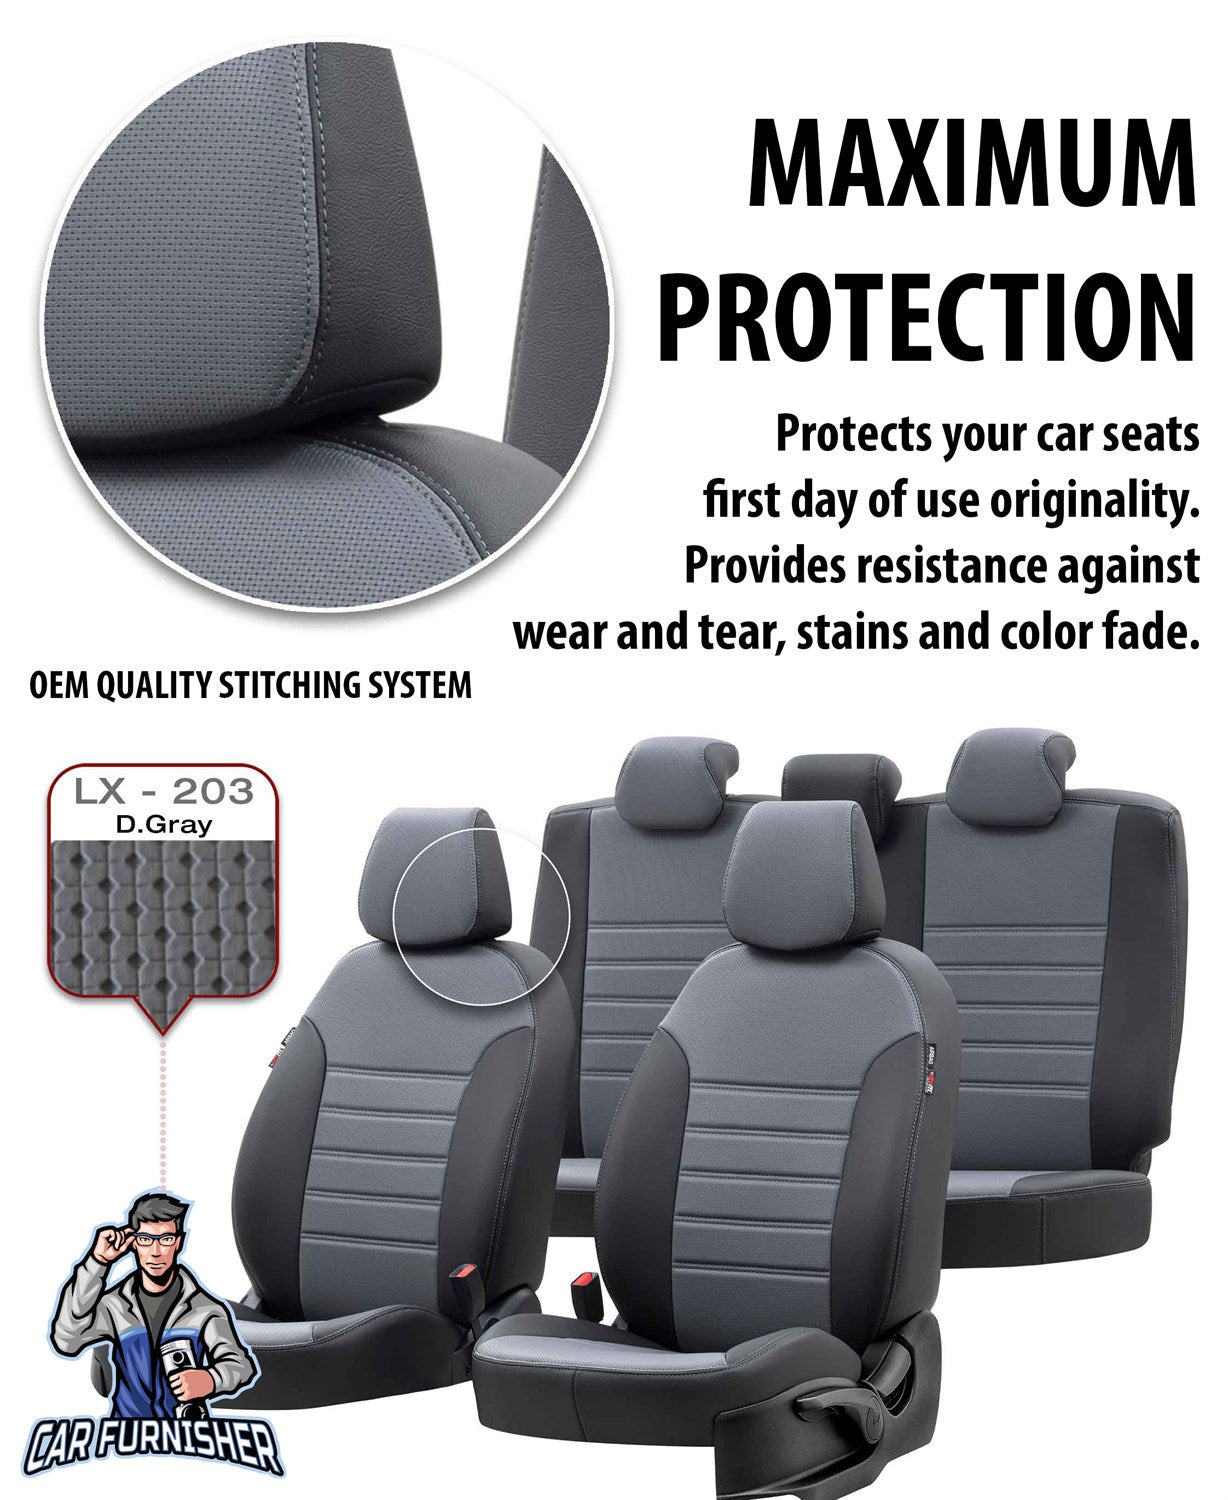 Mitsubishi Attrage Seat Covers New York Leather Design Black Leather